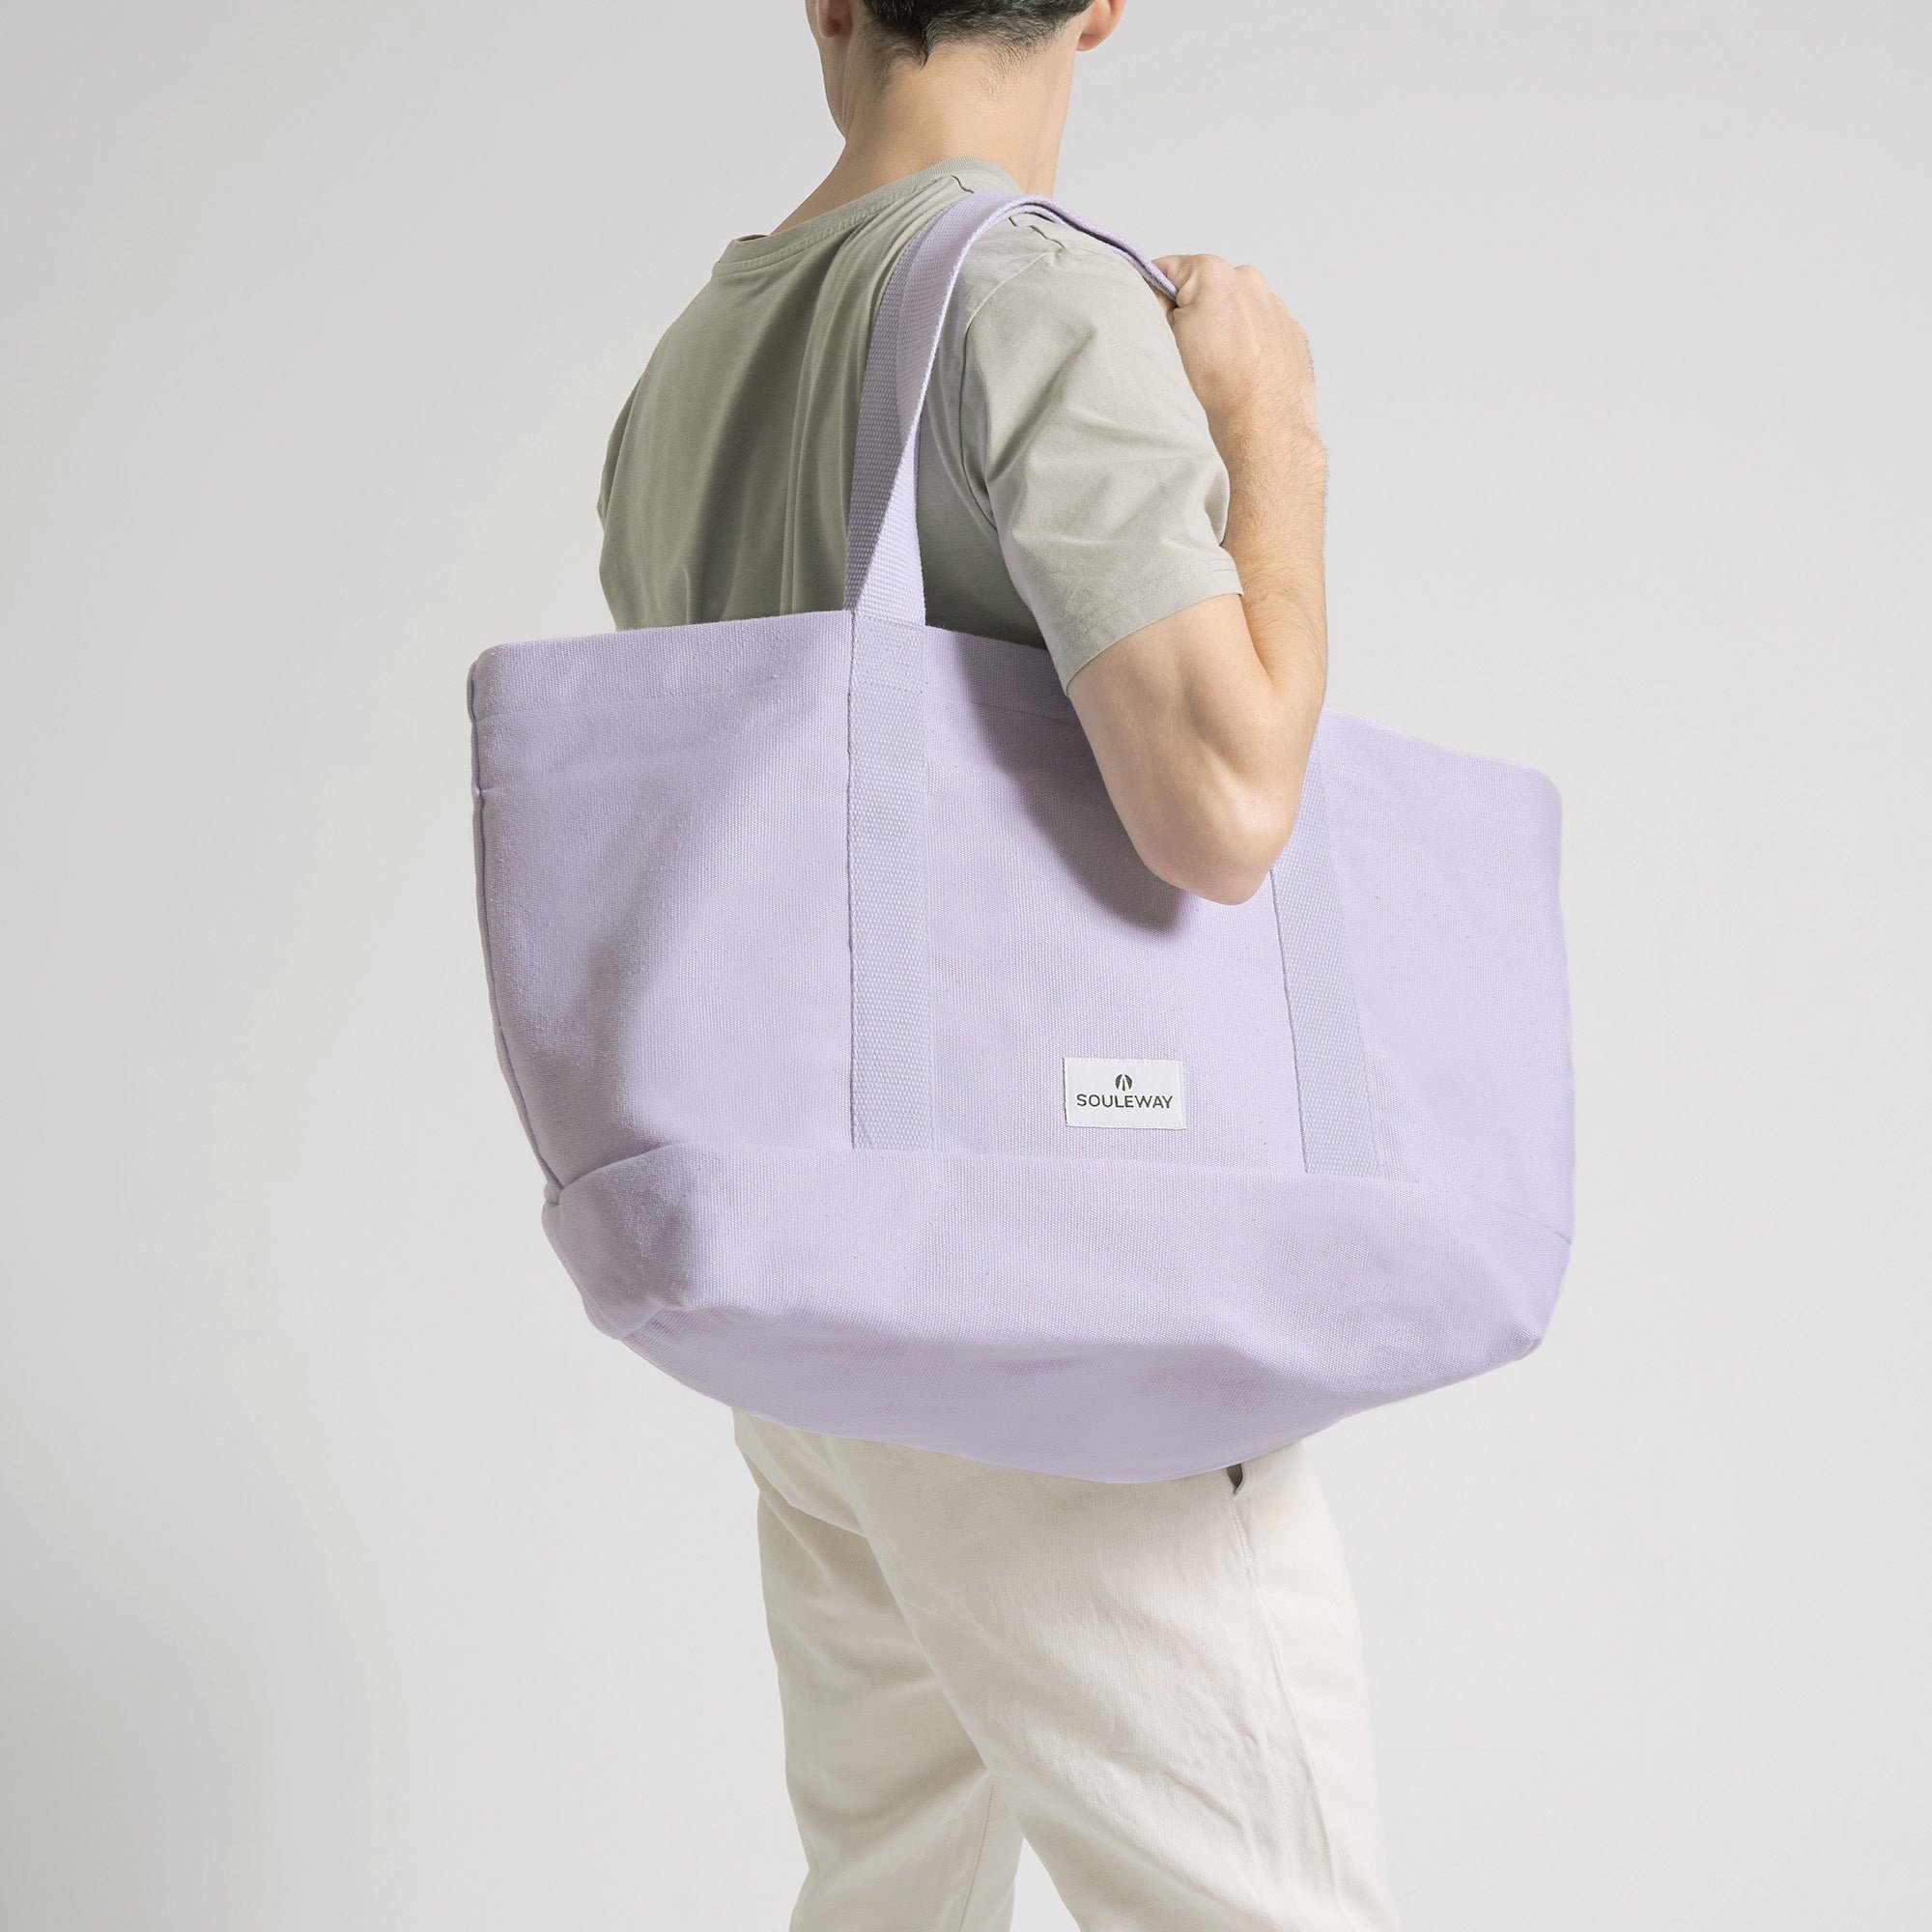 Beach Soft Lavender Souleway Bag Strandtasche